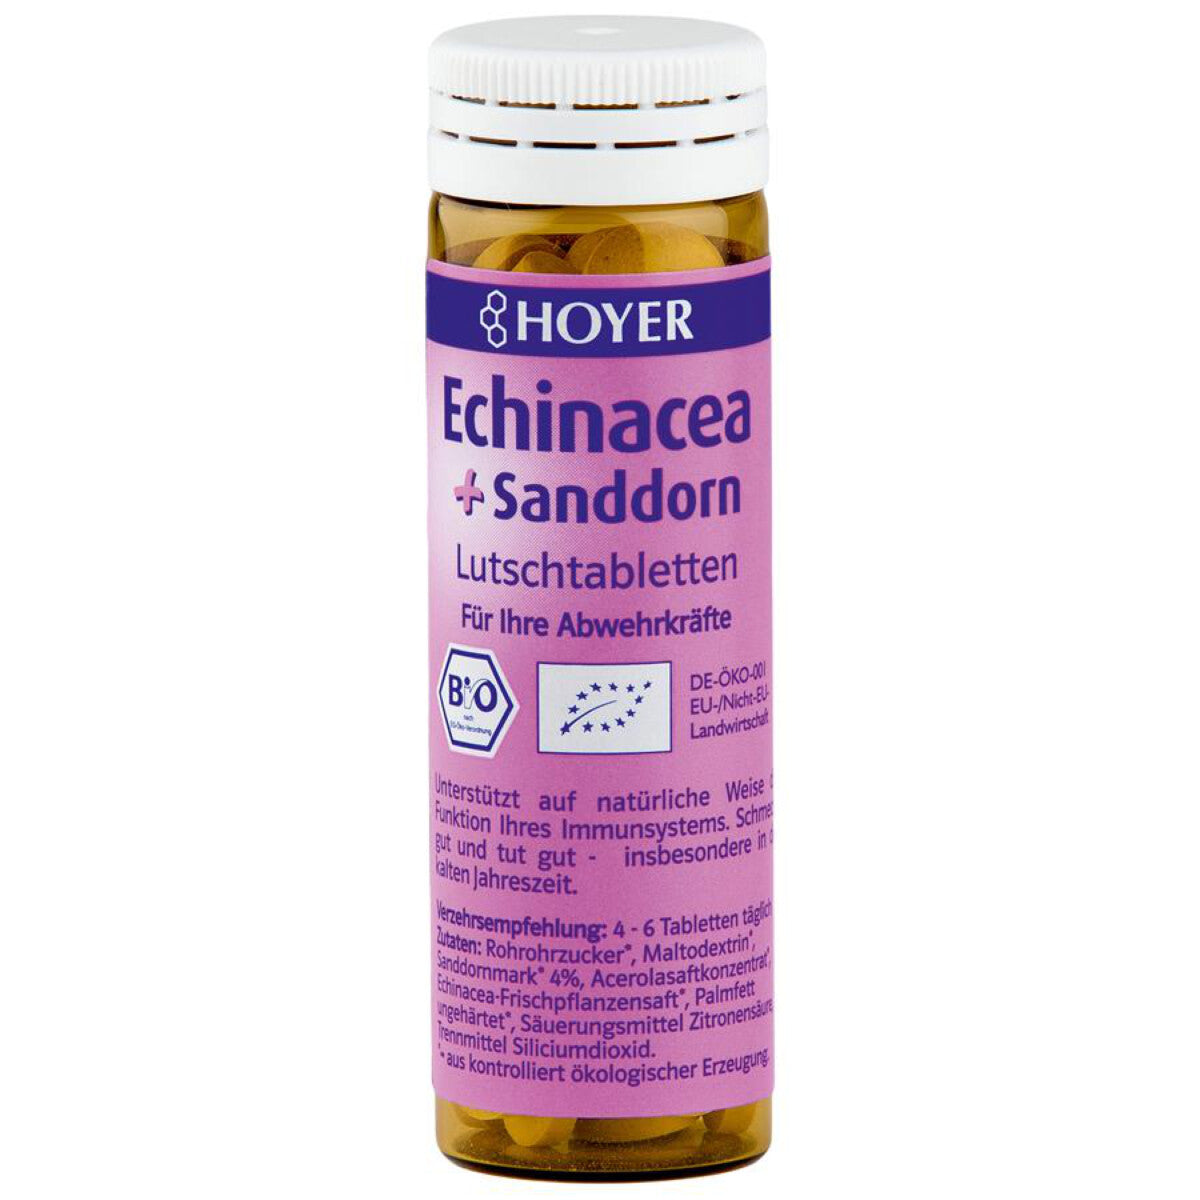 HOYER Echinacea+Sanddorn Lutschtabletten - 60 Stk.